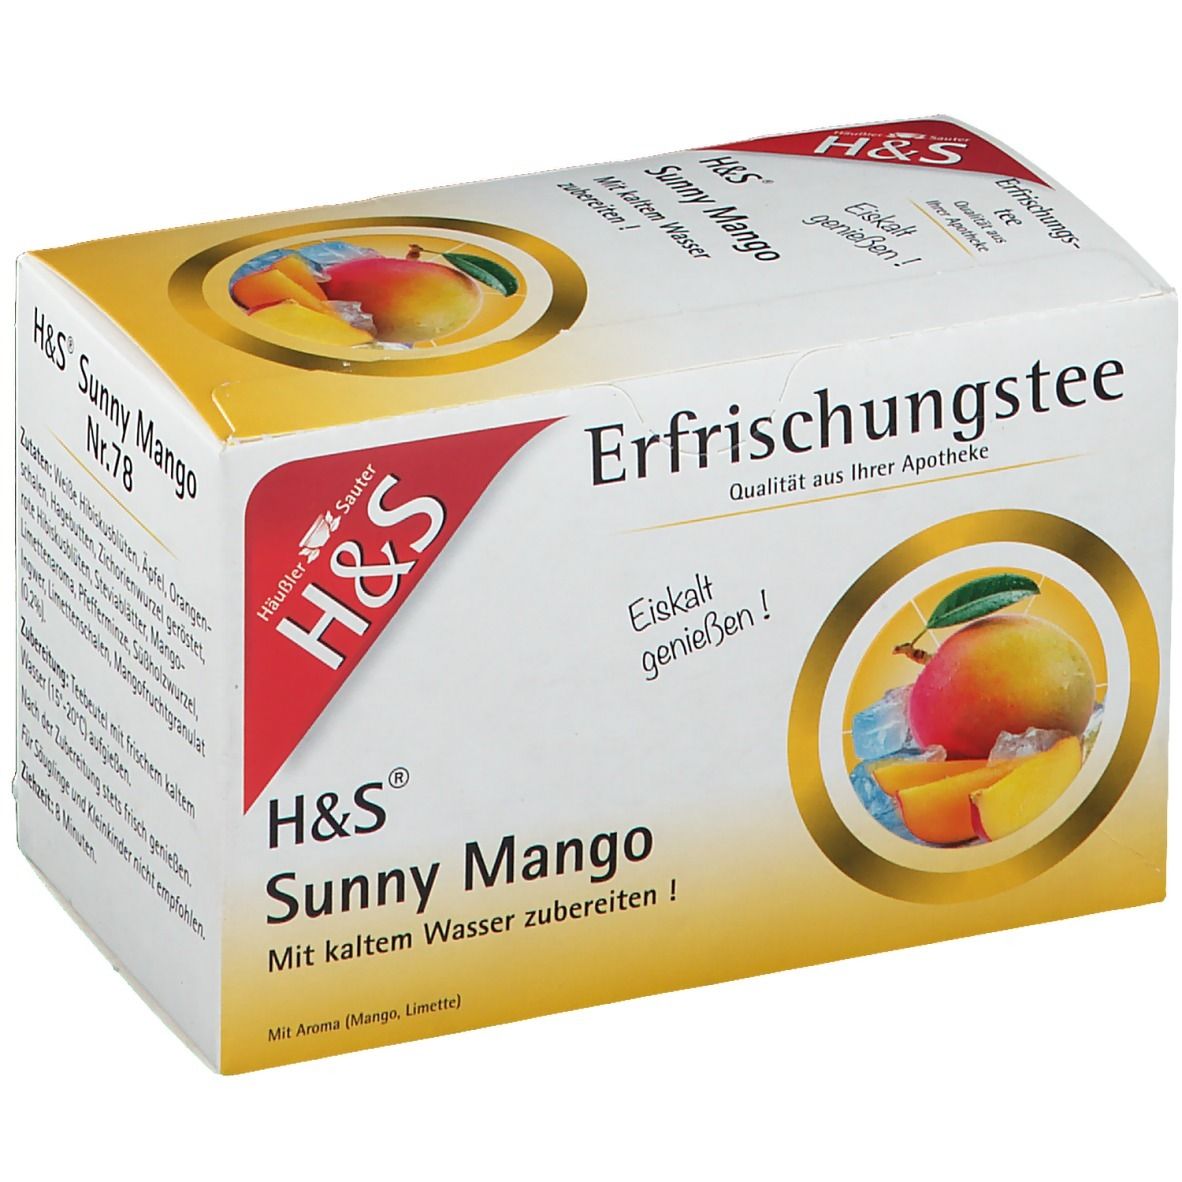 H&S Sunny Mango Erfrischungstee Nr. 78